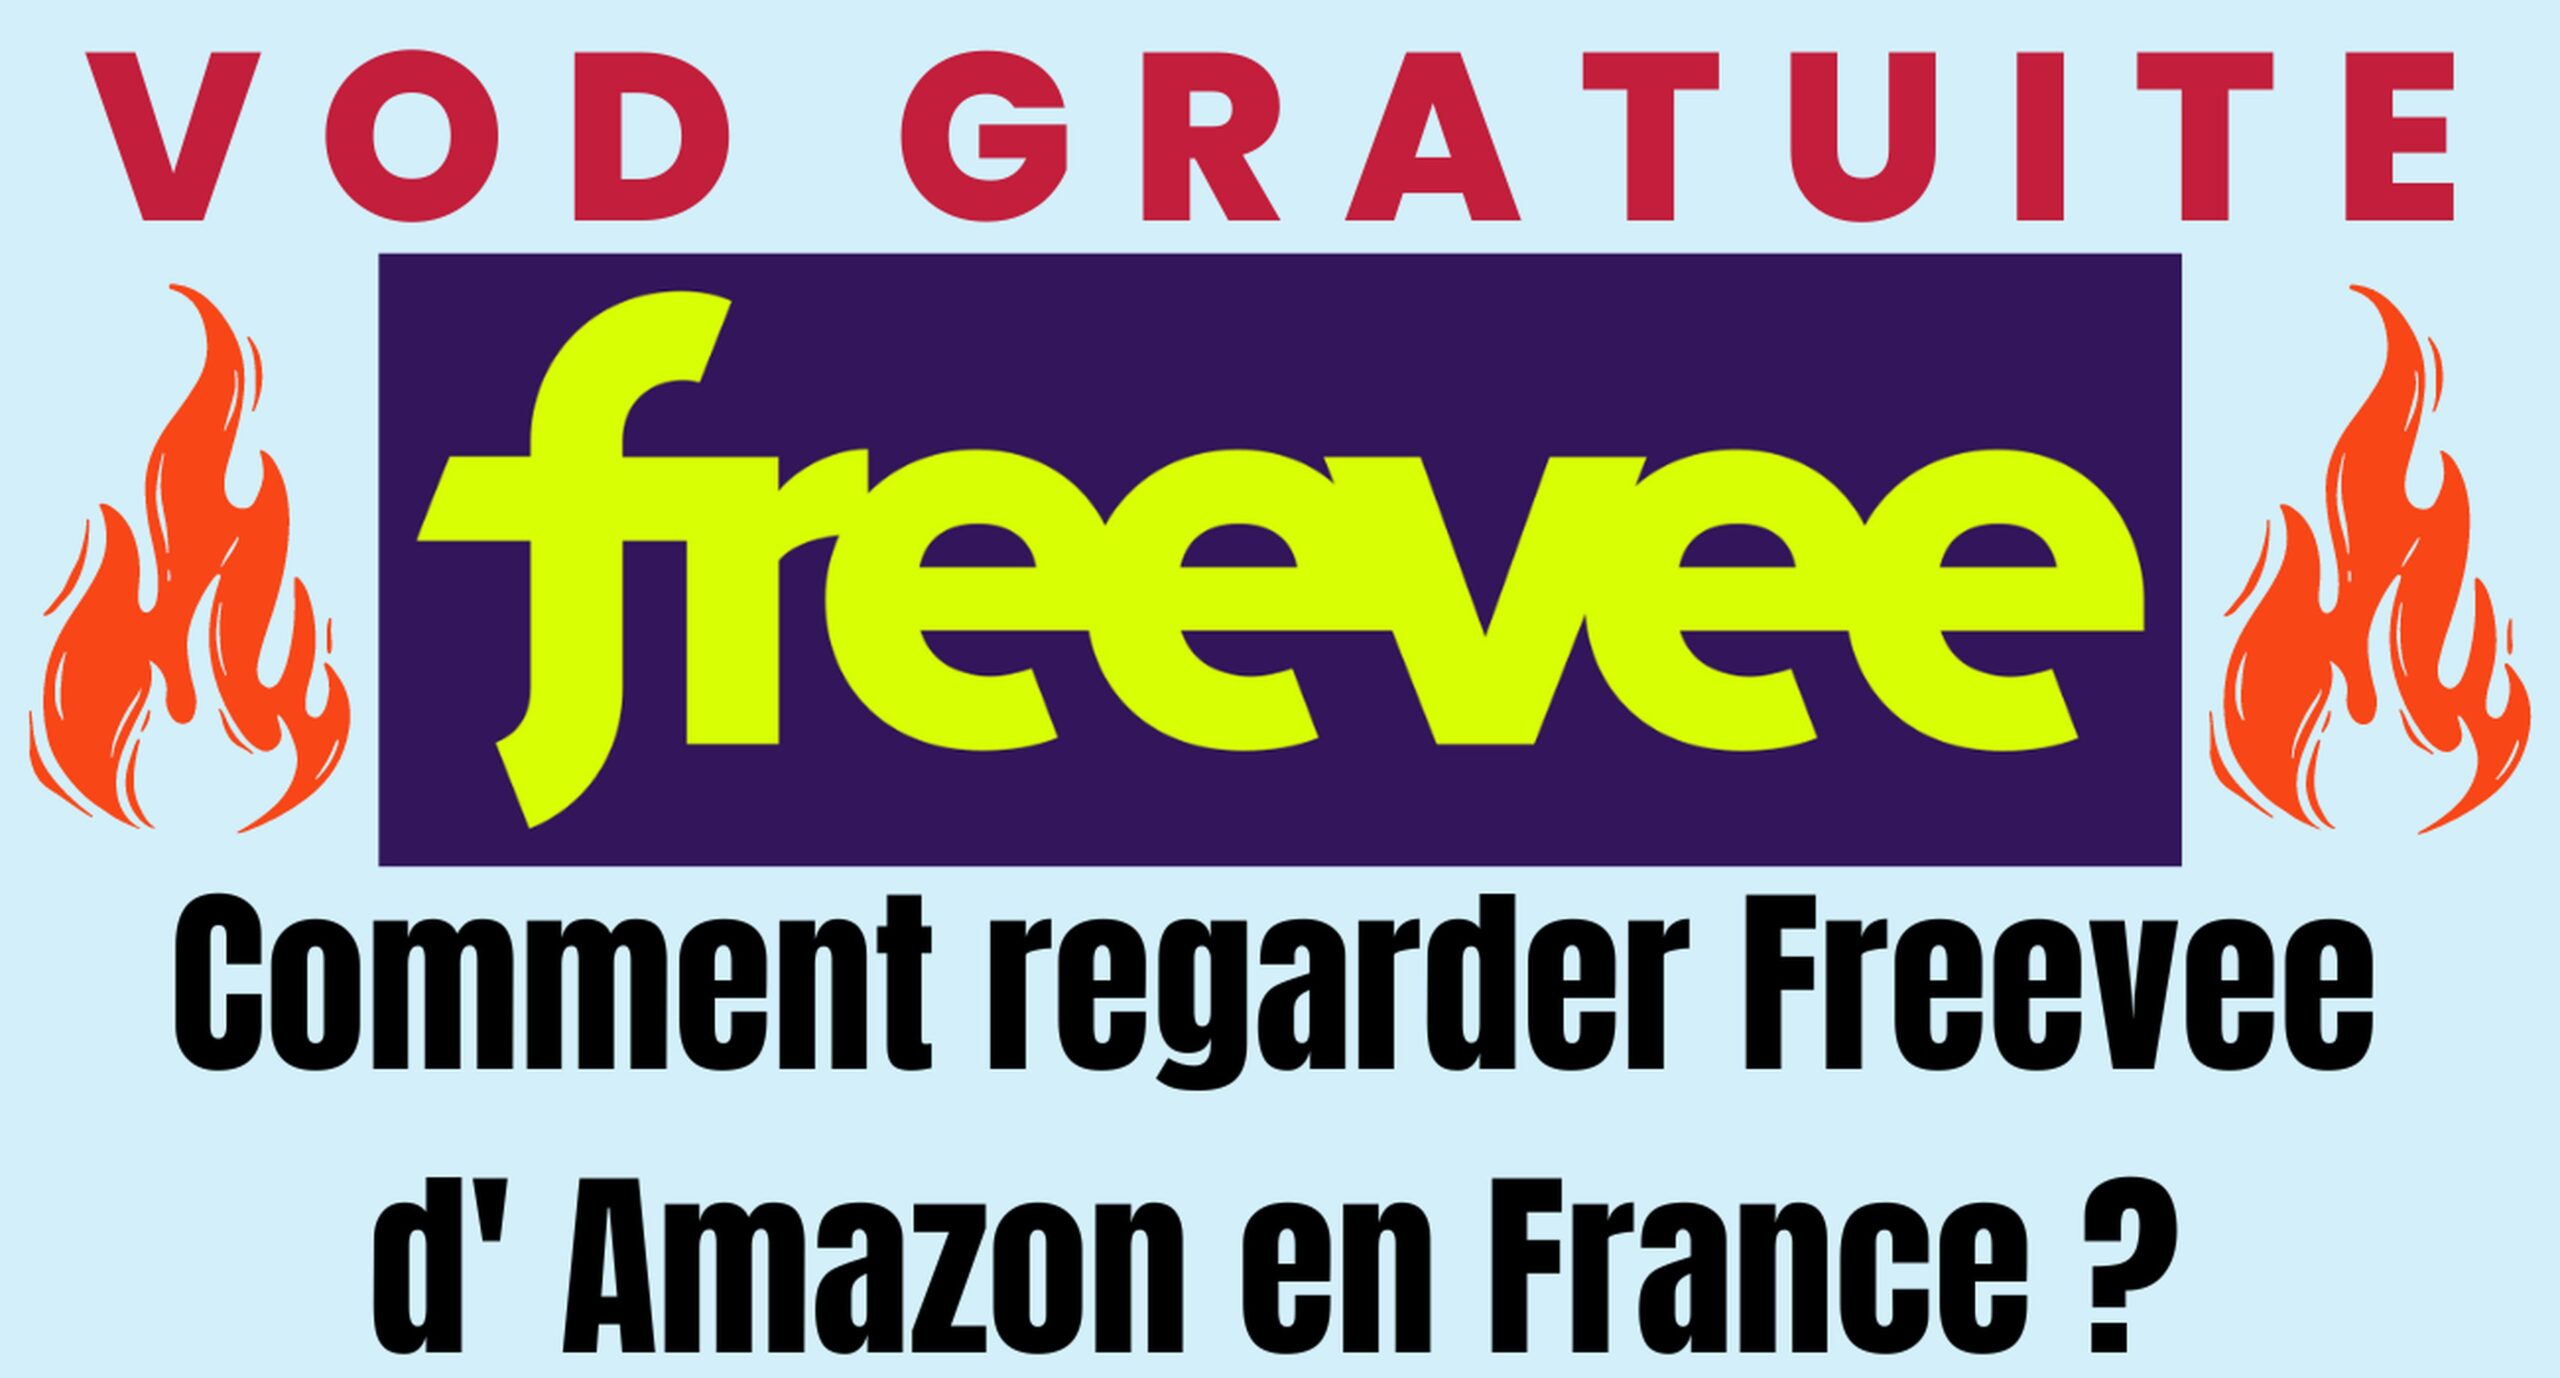 Freevee VOD - Service de streaming gratuit d’ Amazon 10